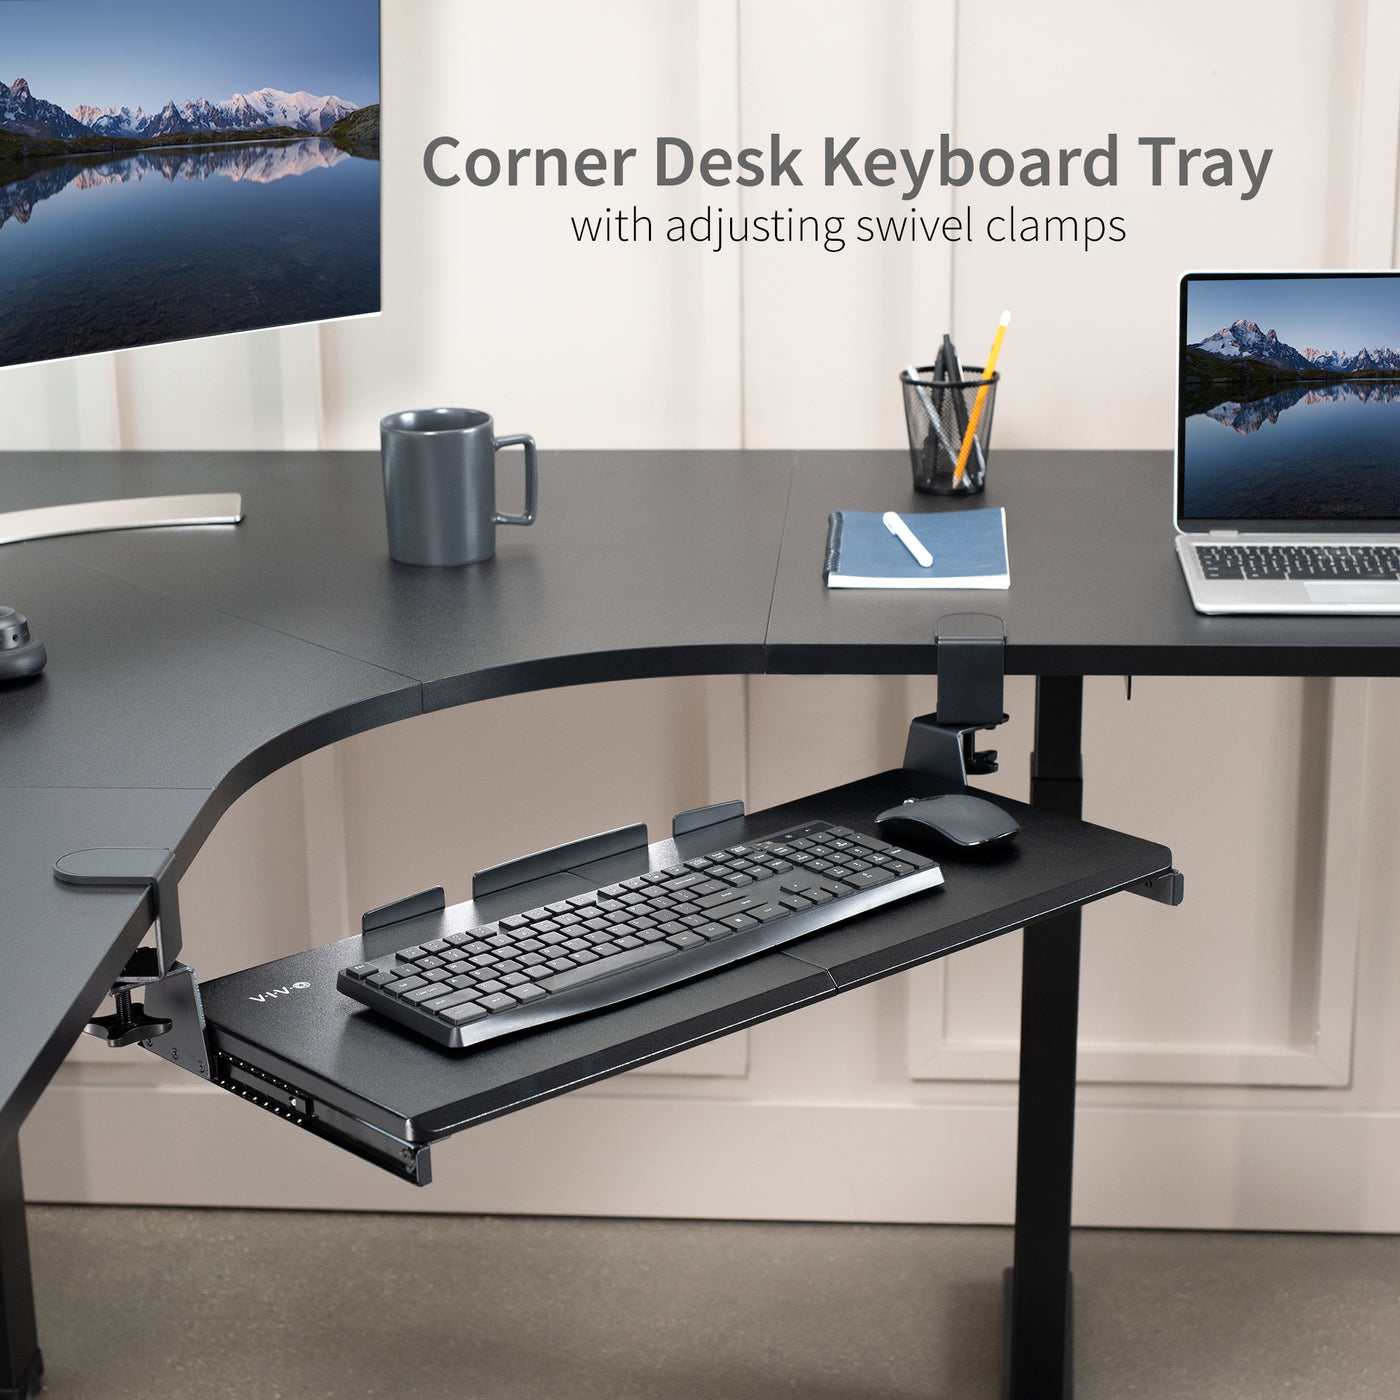 Under desk corner keyboard tray platform with adjustable swivel clamps for an ergonomic workspace.